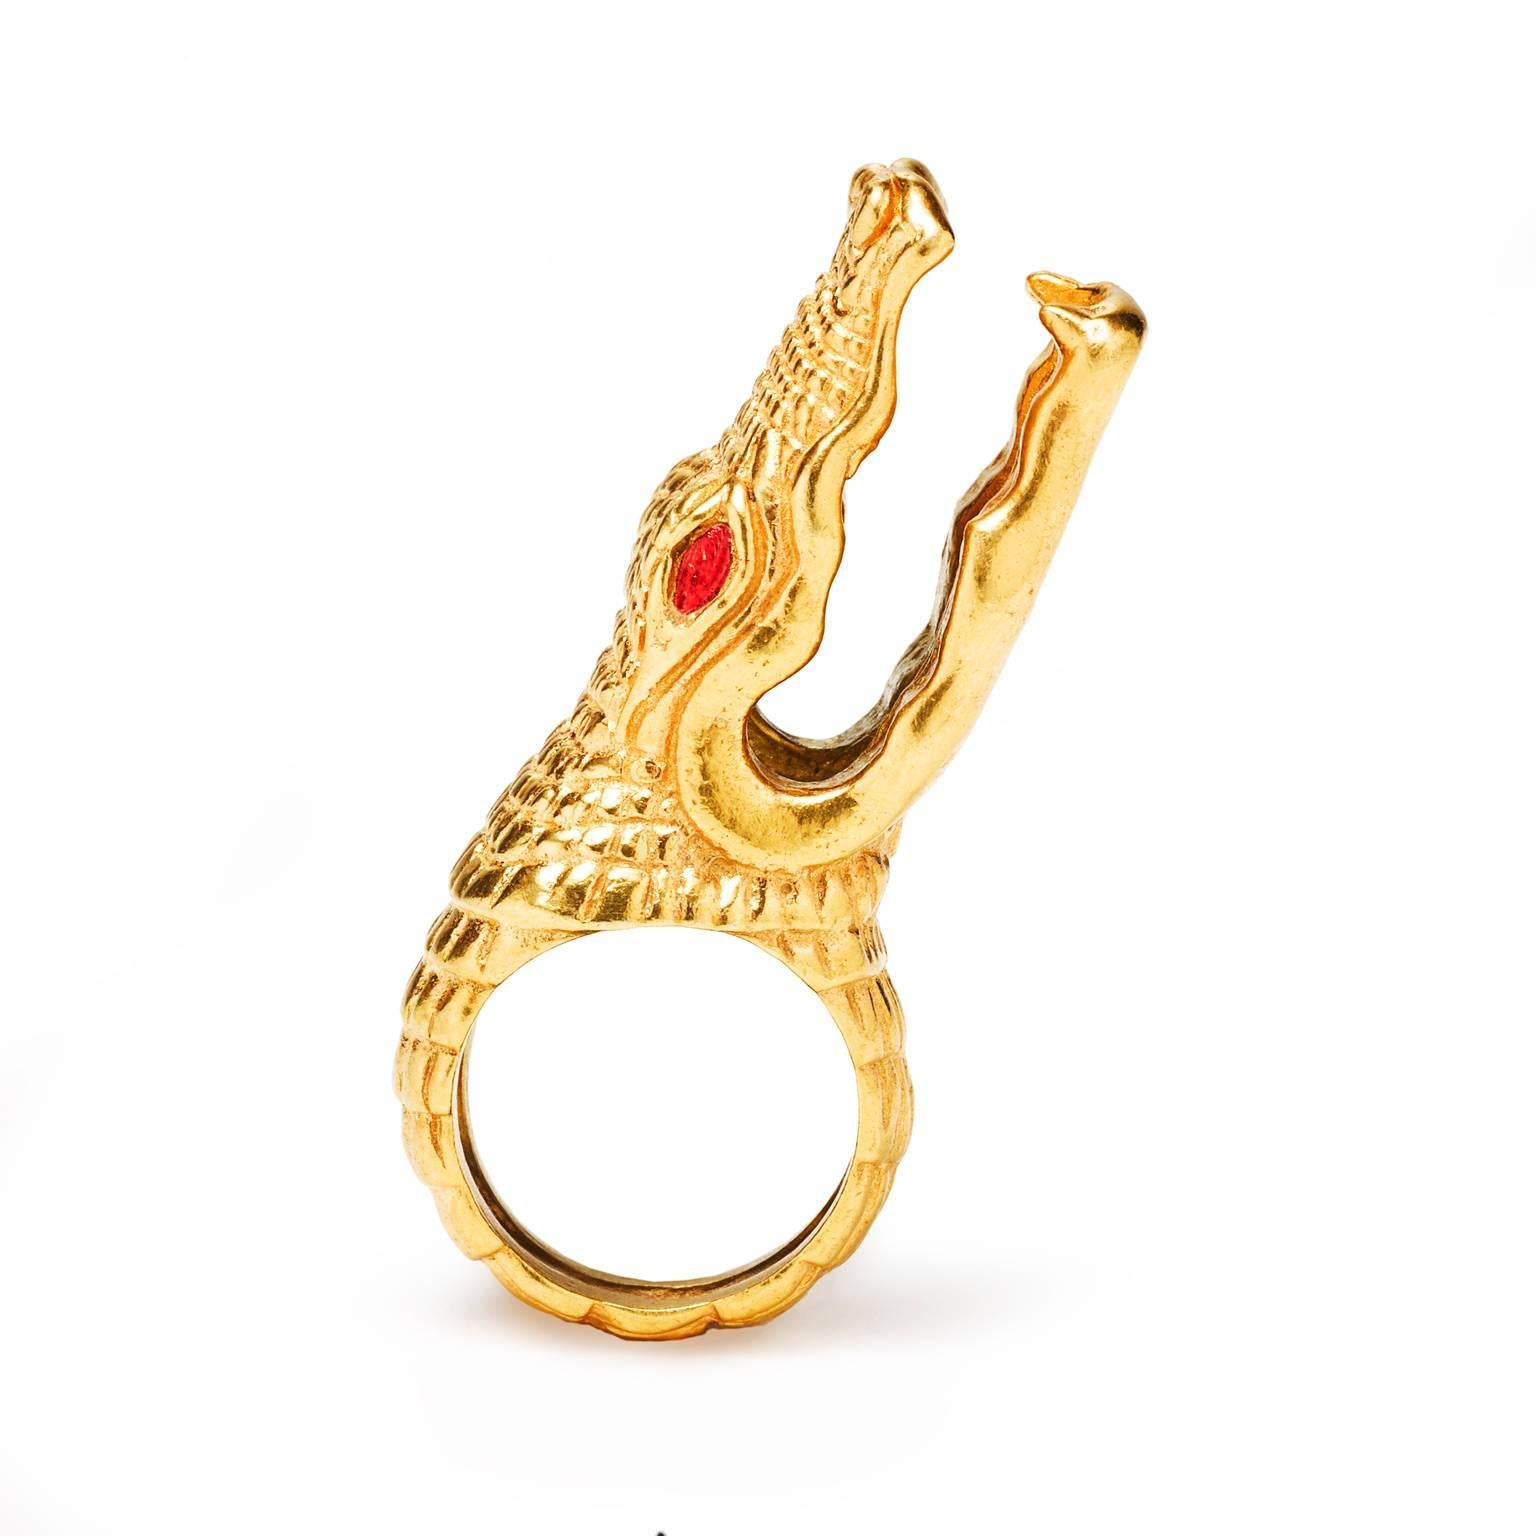 Alligator Ring. Size 7.
Red enameled eye. 
Gold Plated. 